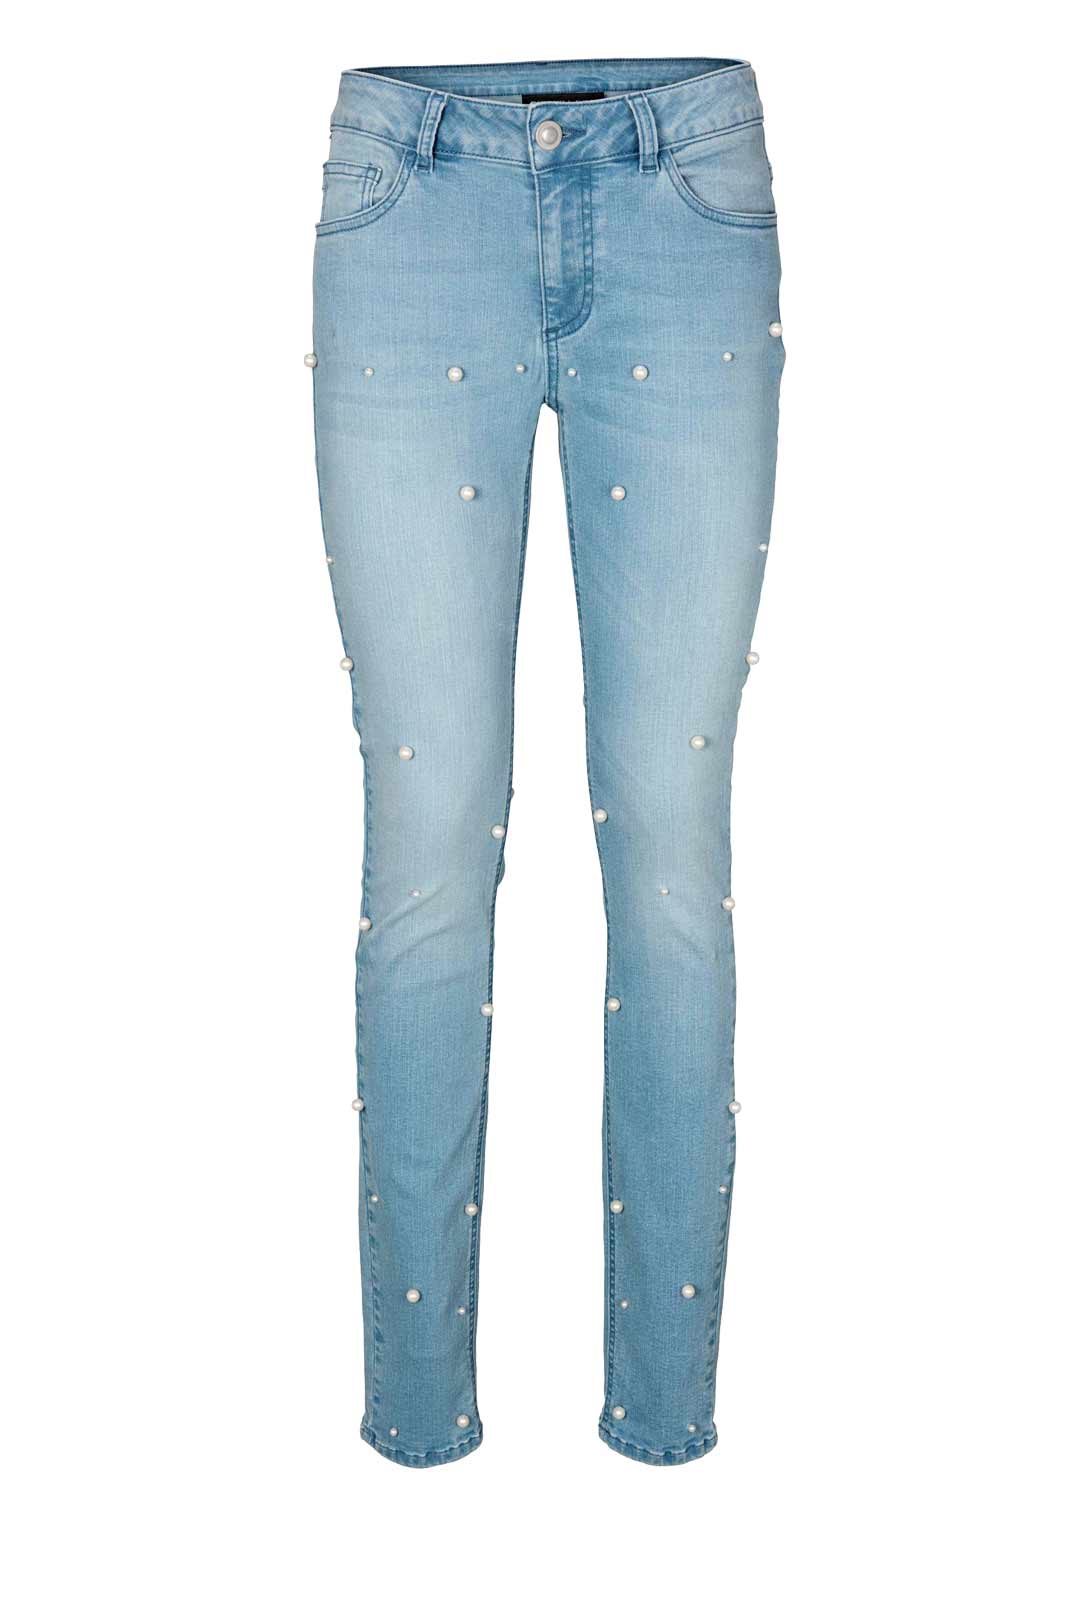 Patrizia Dini Damen Designer-Jeans mit Perlen, hellblau